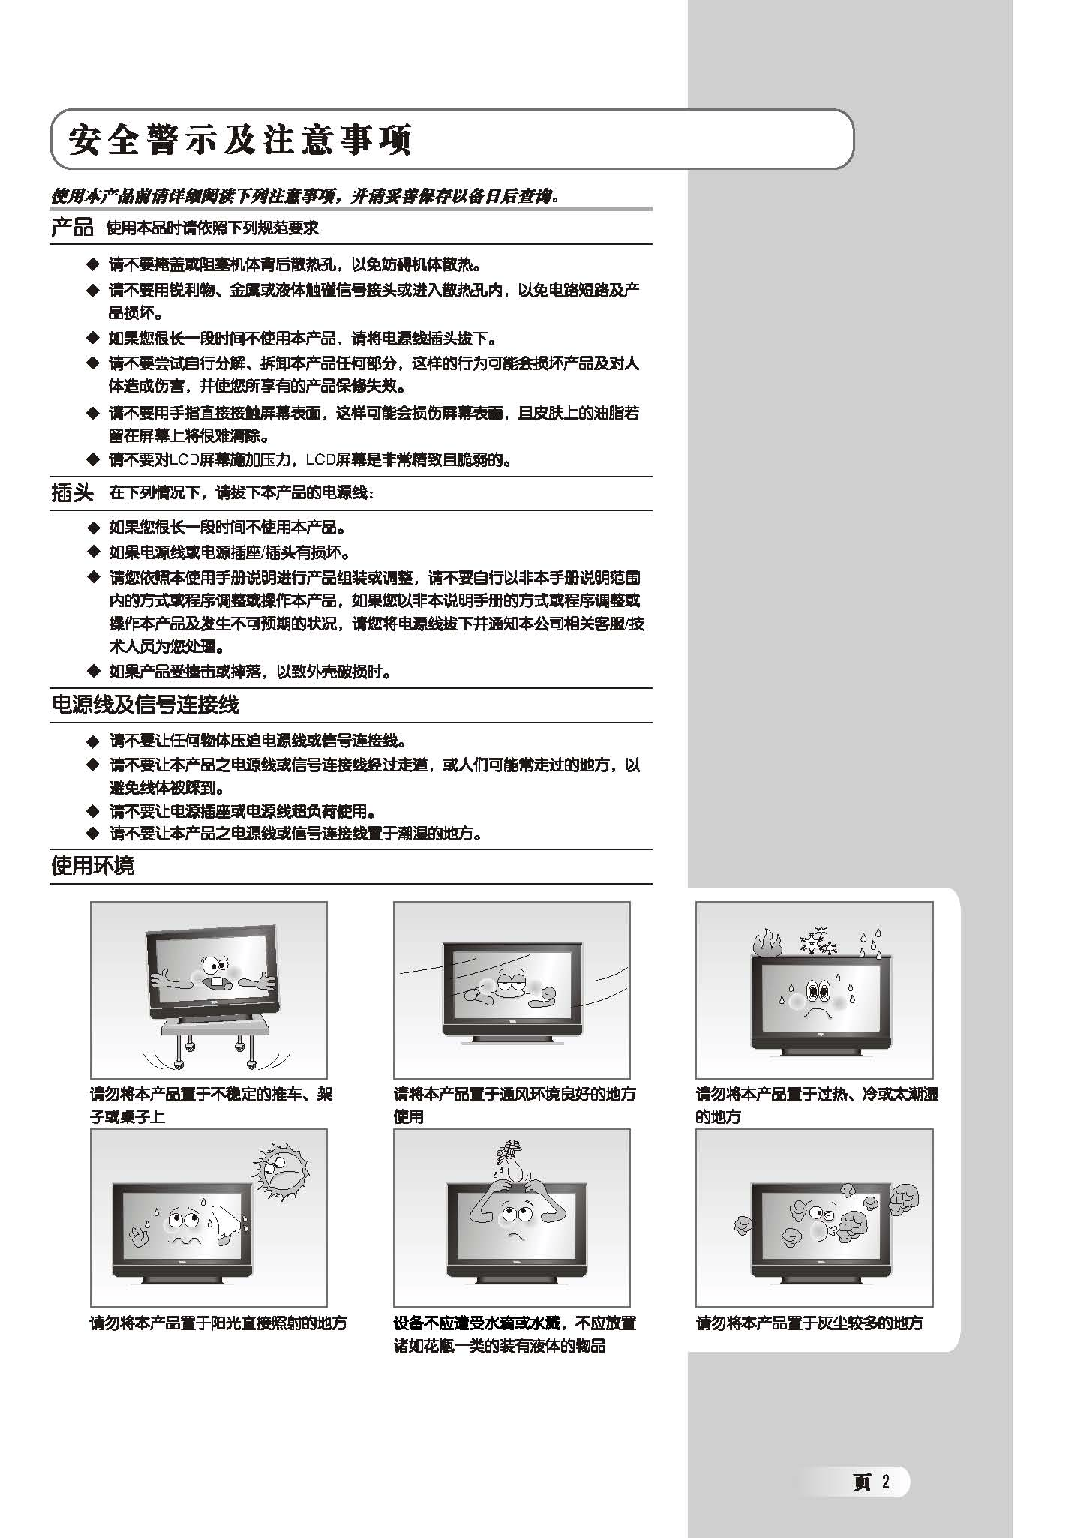 TCL L26M60, L32E76, LCD27K76 使用说明书 第2页